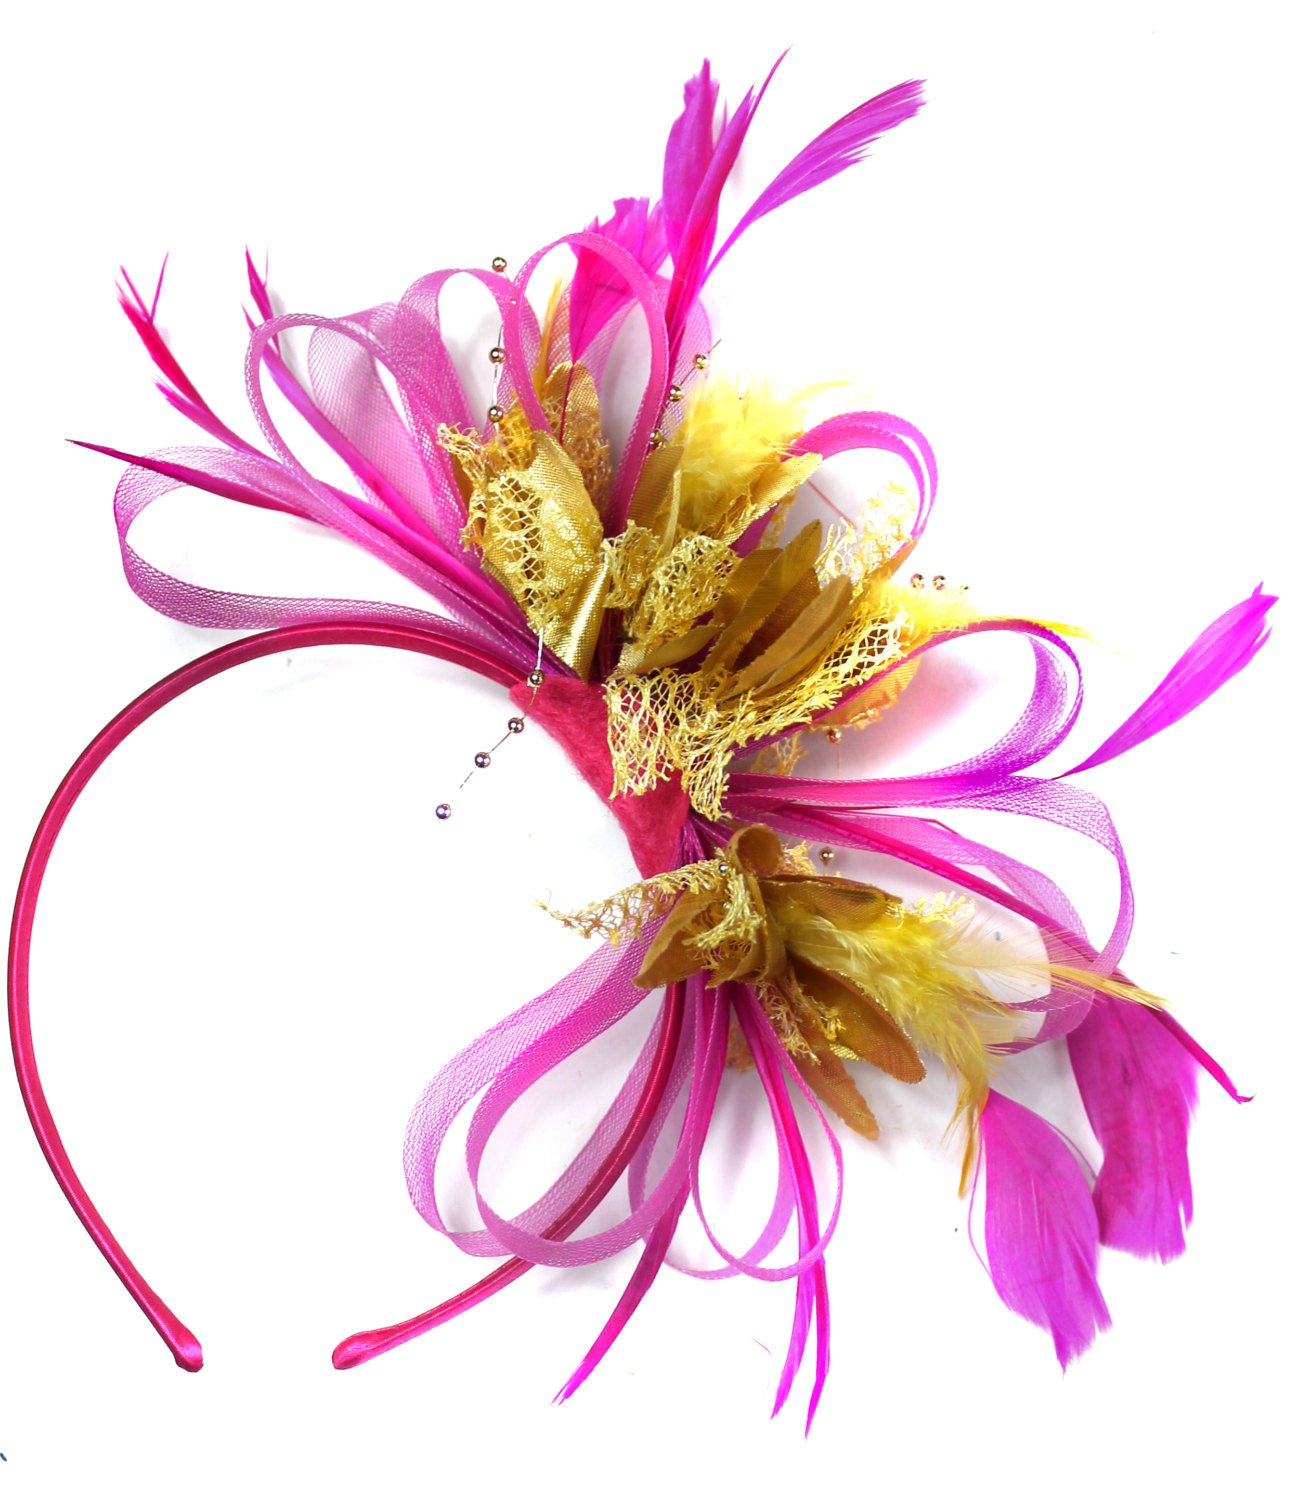 Caprilite Fuchsia Pink & Gold Feathers Fascinator on Headband Ascot Wedding